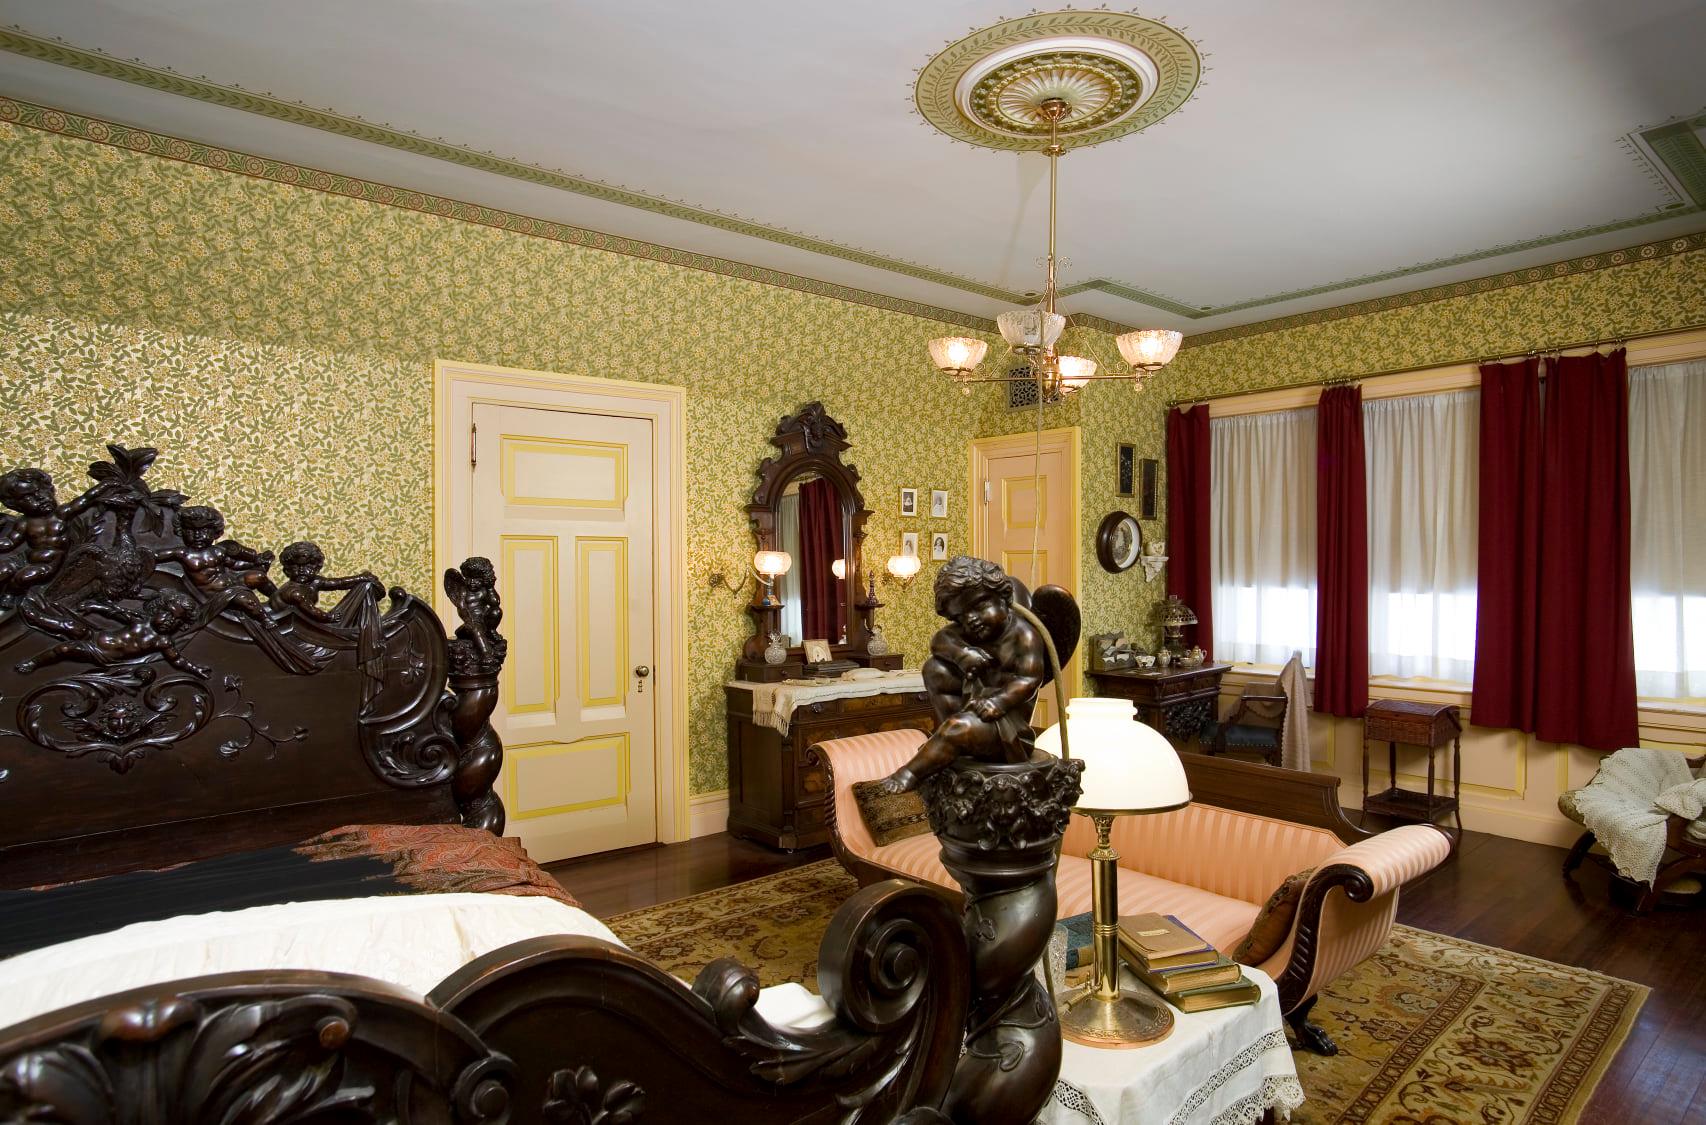 The Mark Twain House's bedroom